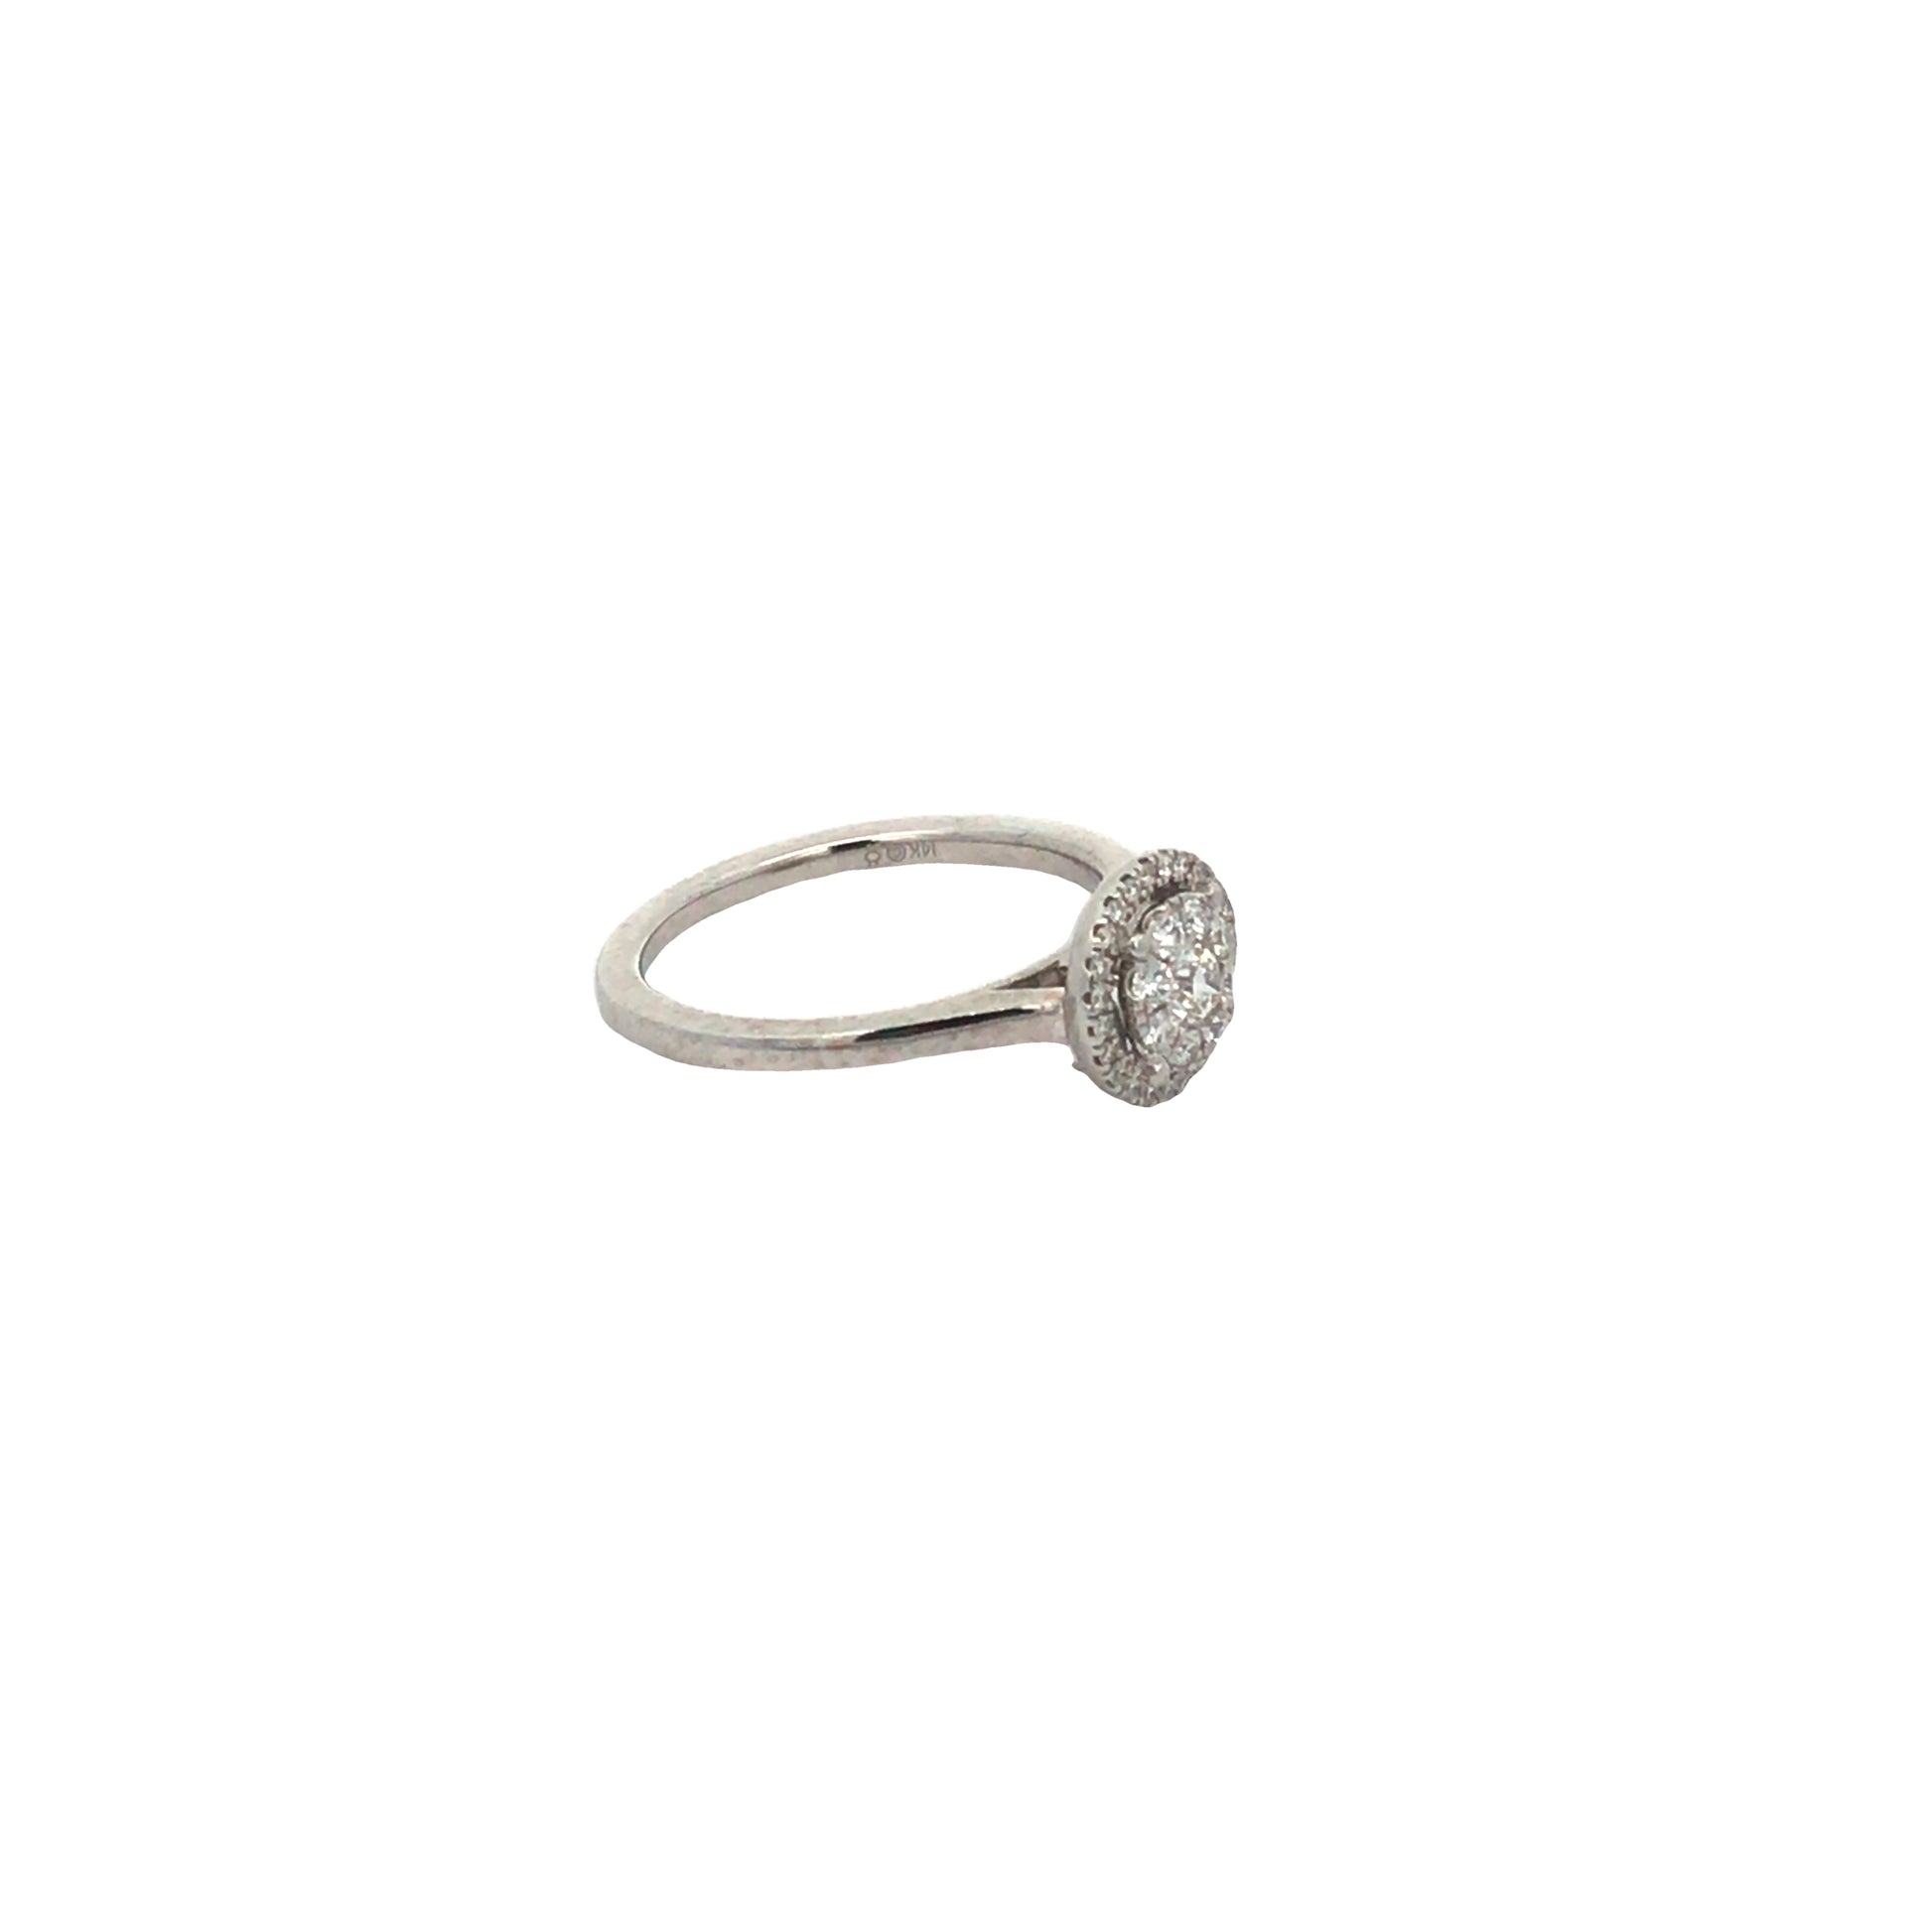 10K White Gold Diamond Engagement Ring Size 7  2.3Dwt